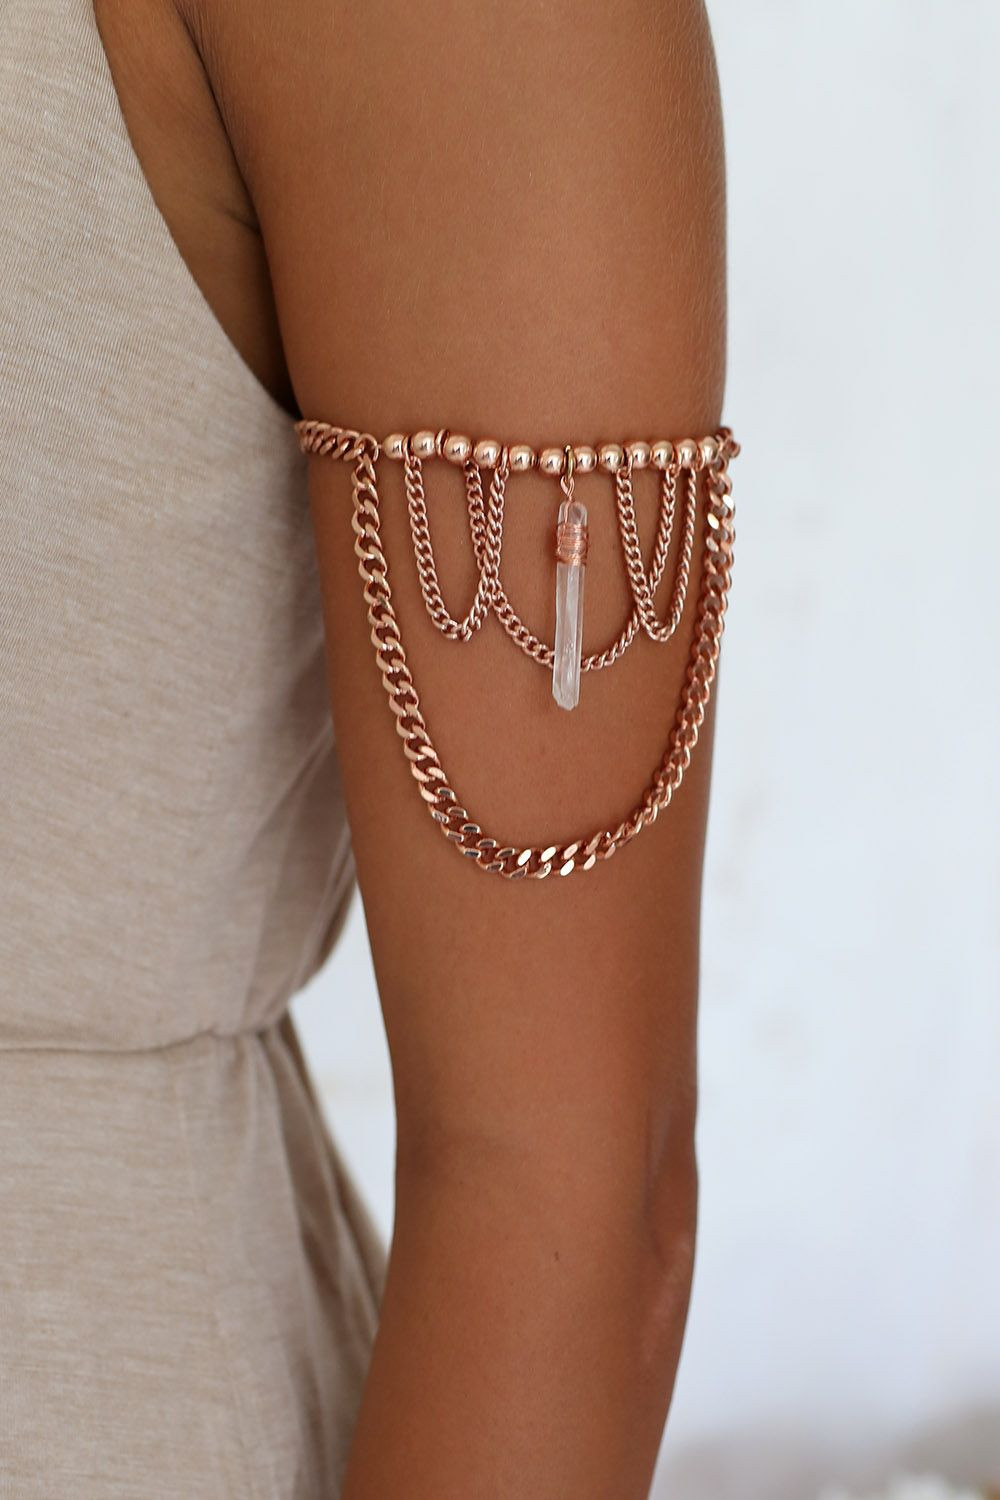 Body Jewelry Arm
 Sabo Skirt Rose Gold Arm Chain Boho Babe